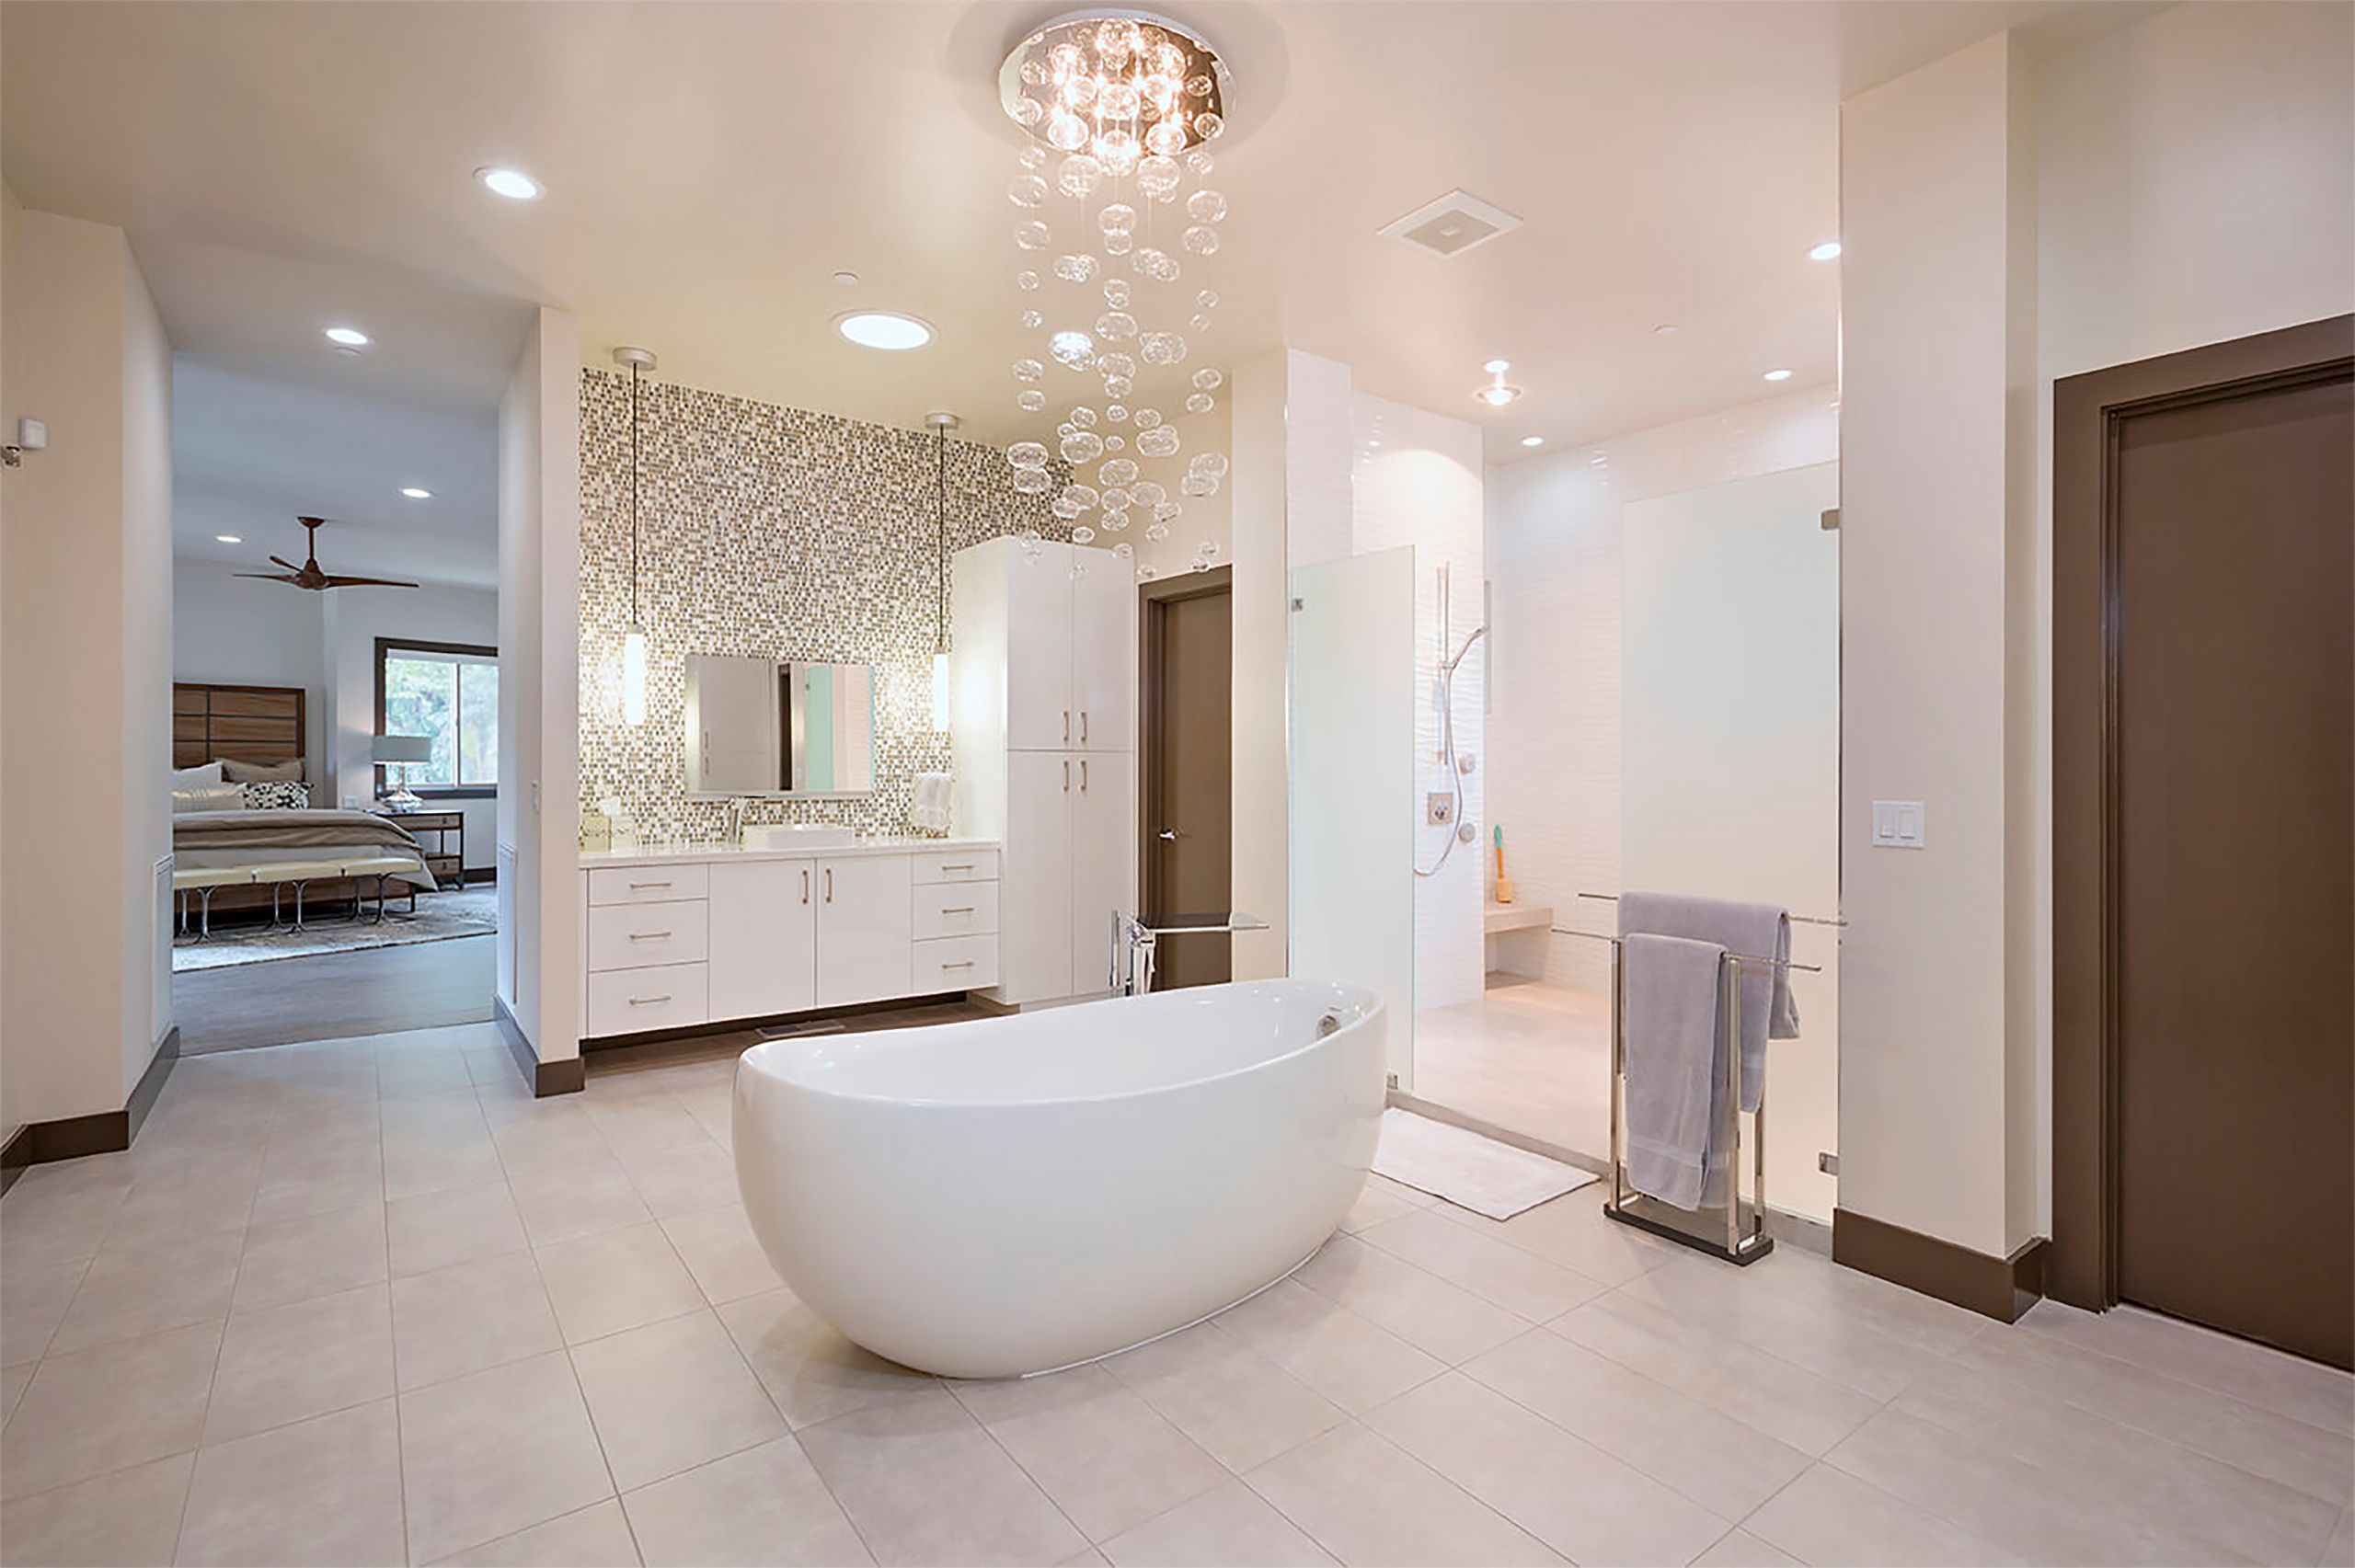 Residential Bathroom Remodeling
 Winner Best Residential Bathroom Design